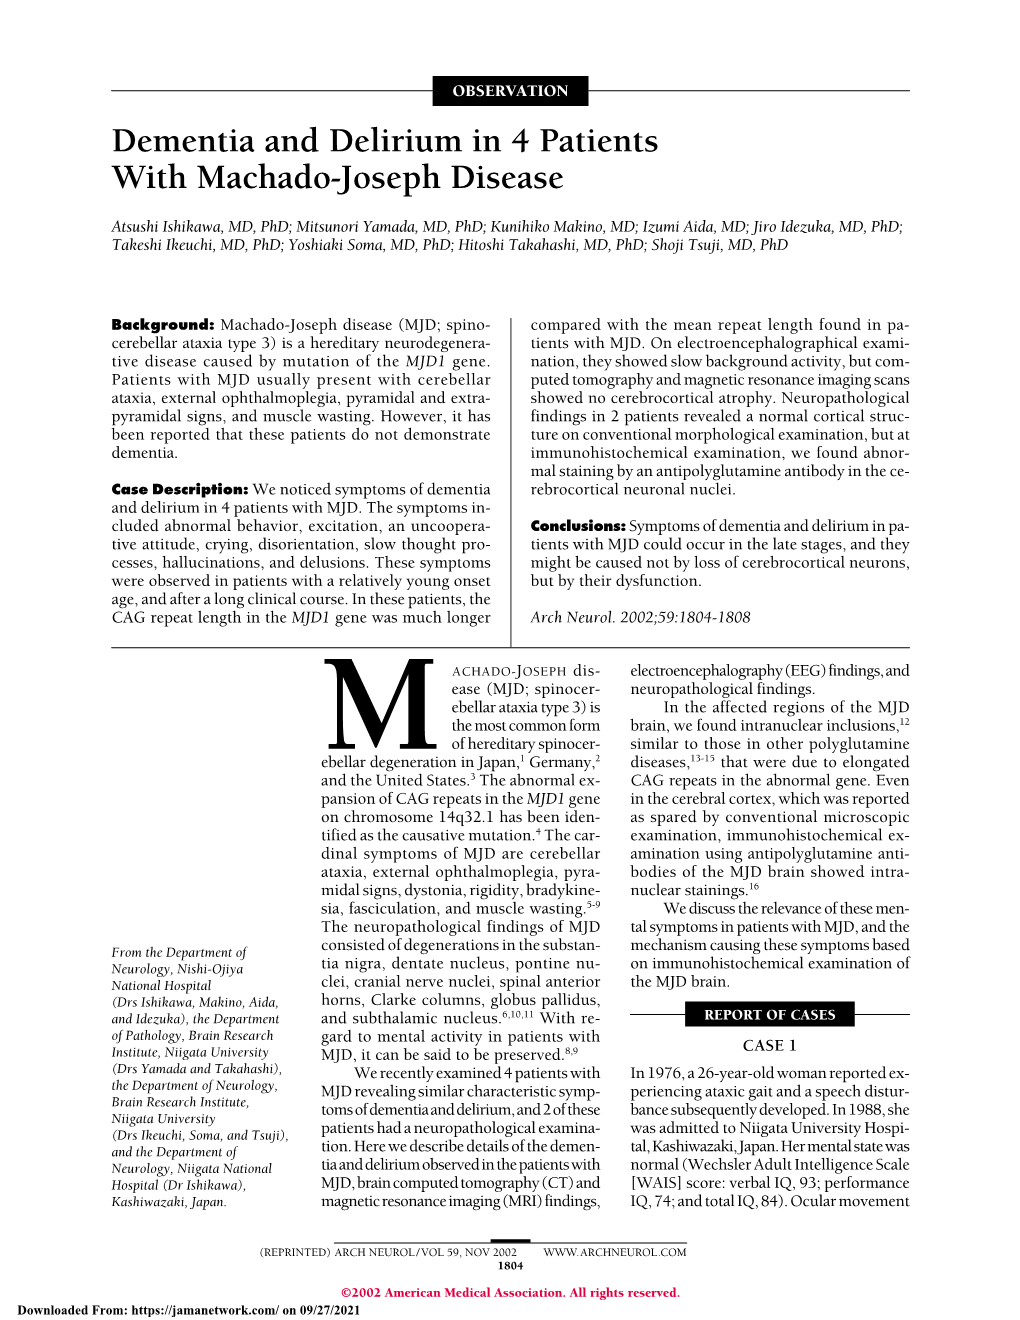 Dementia and Delirium in 4 Patients with Machado-Joseph Disease